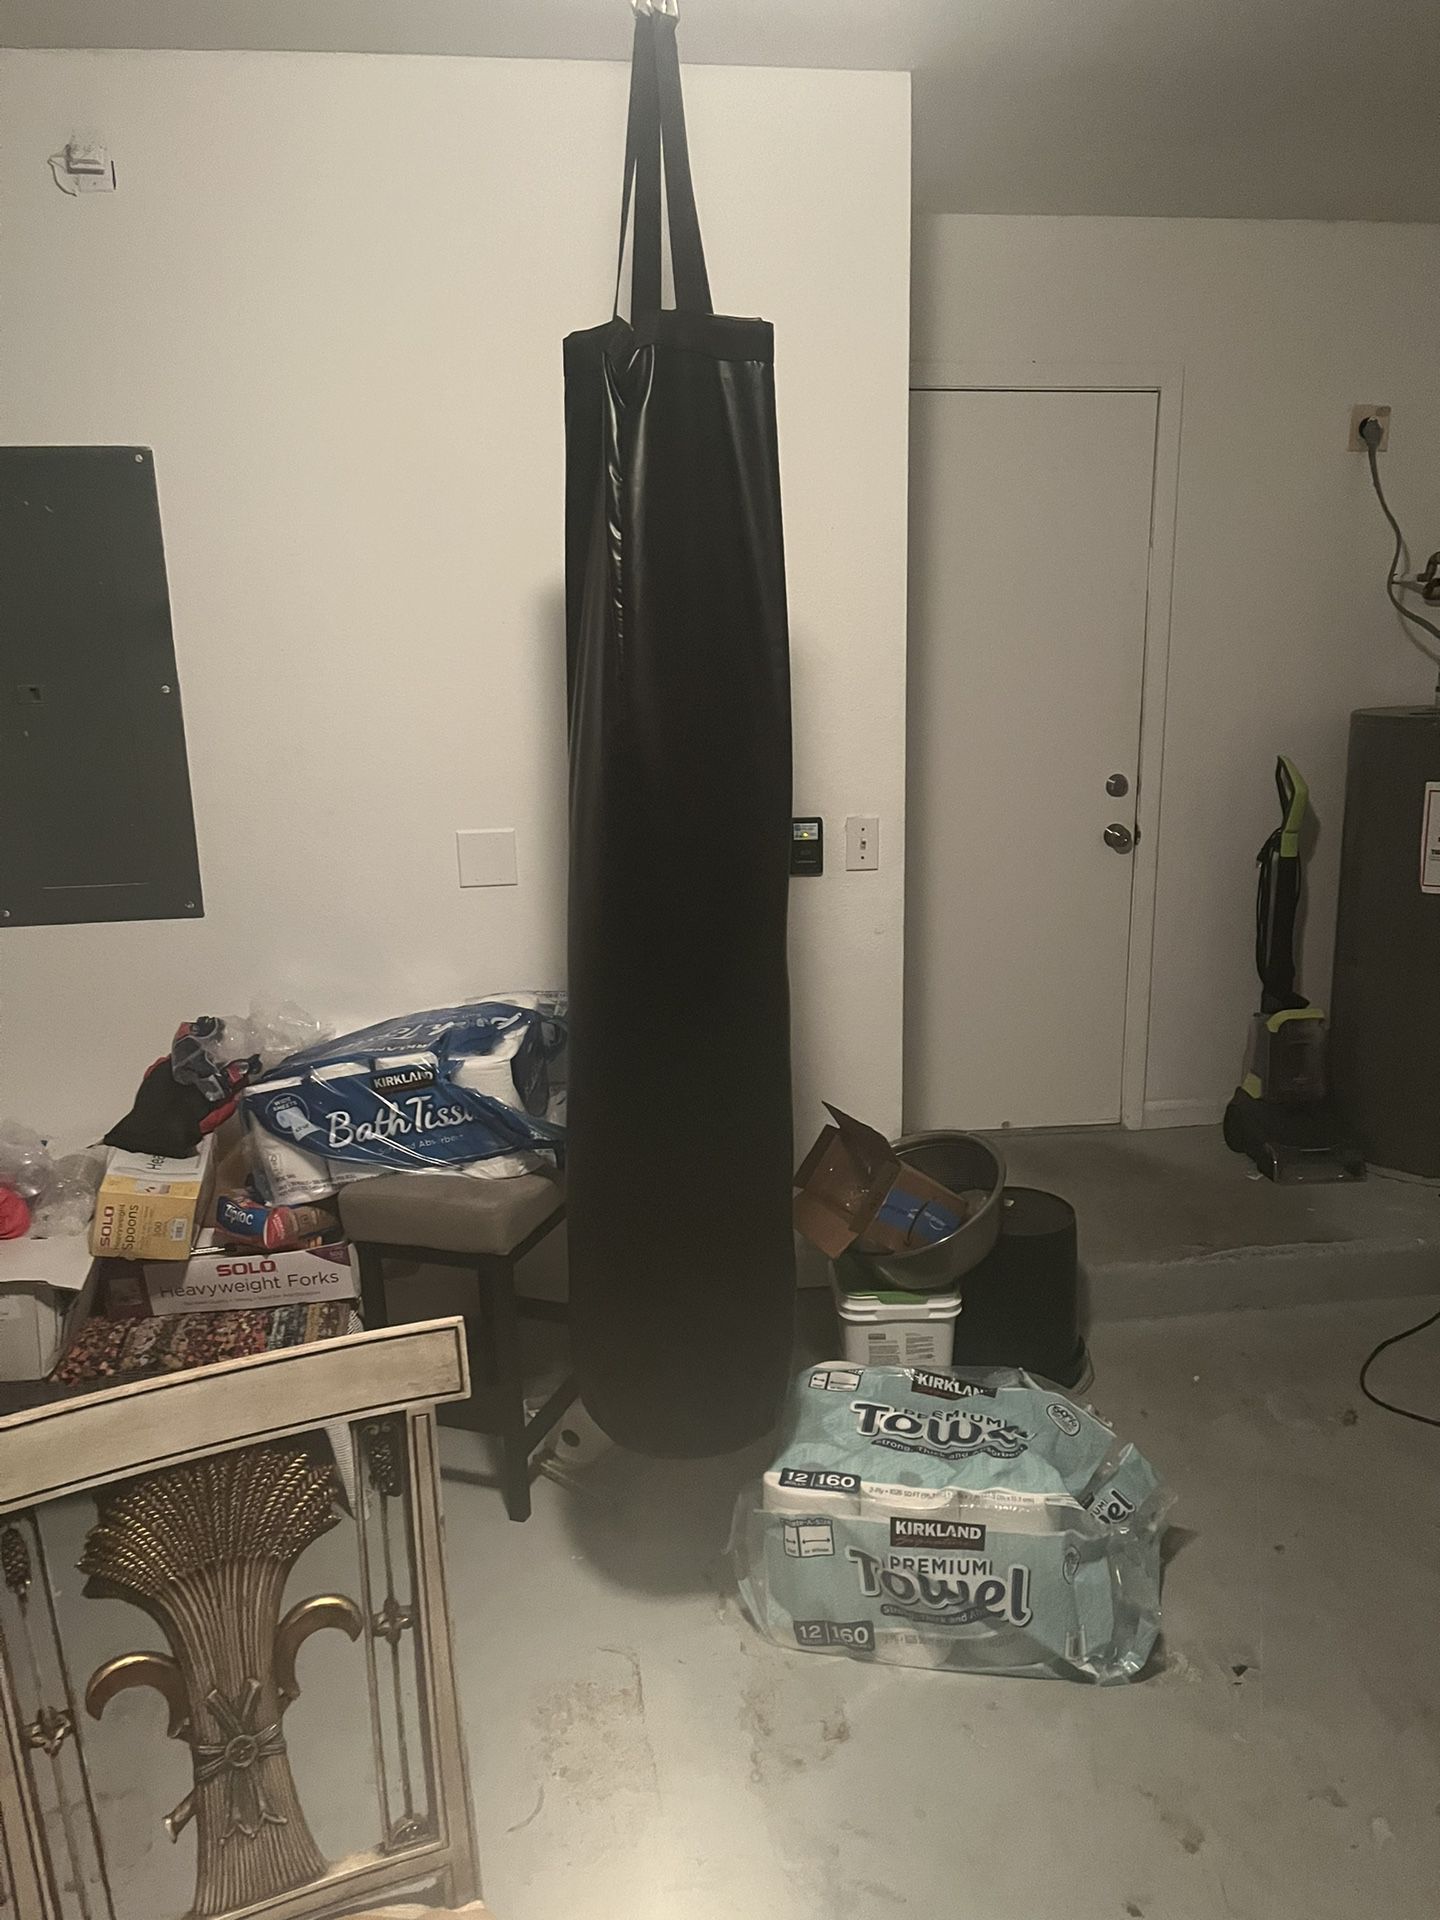 6 Foot Tall Punching/Kickboxing Bag